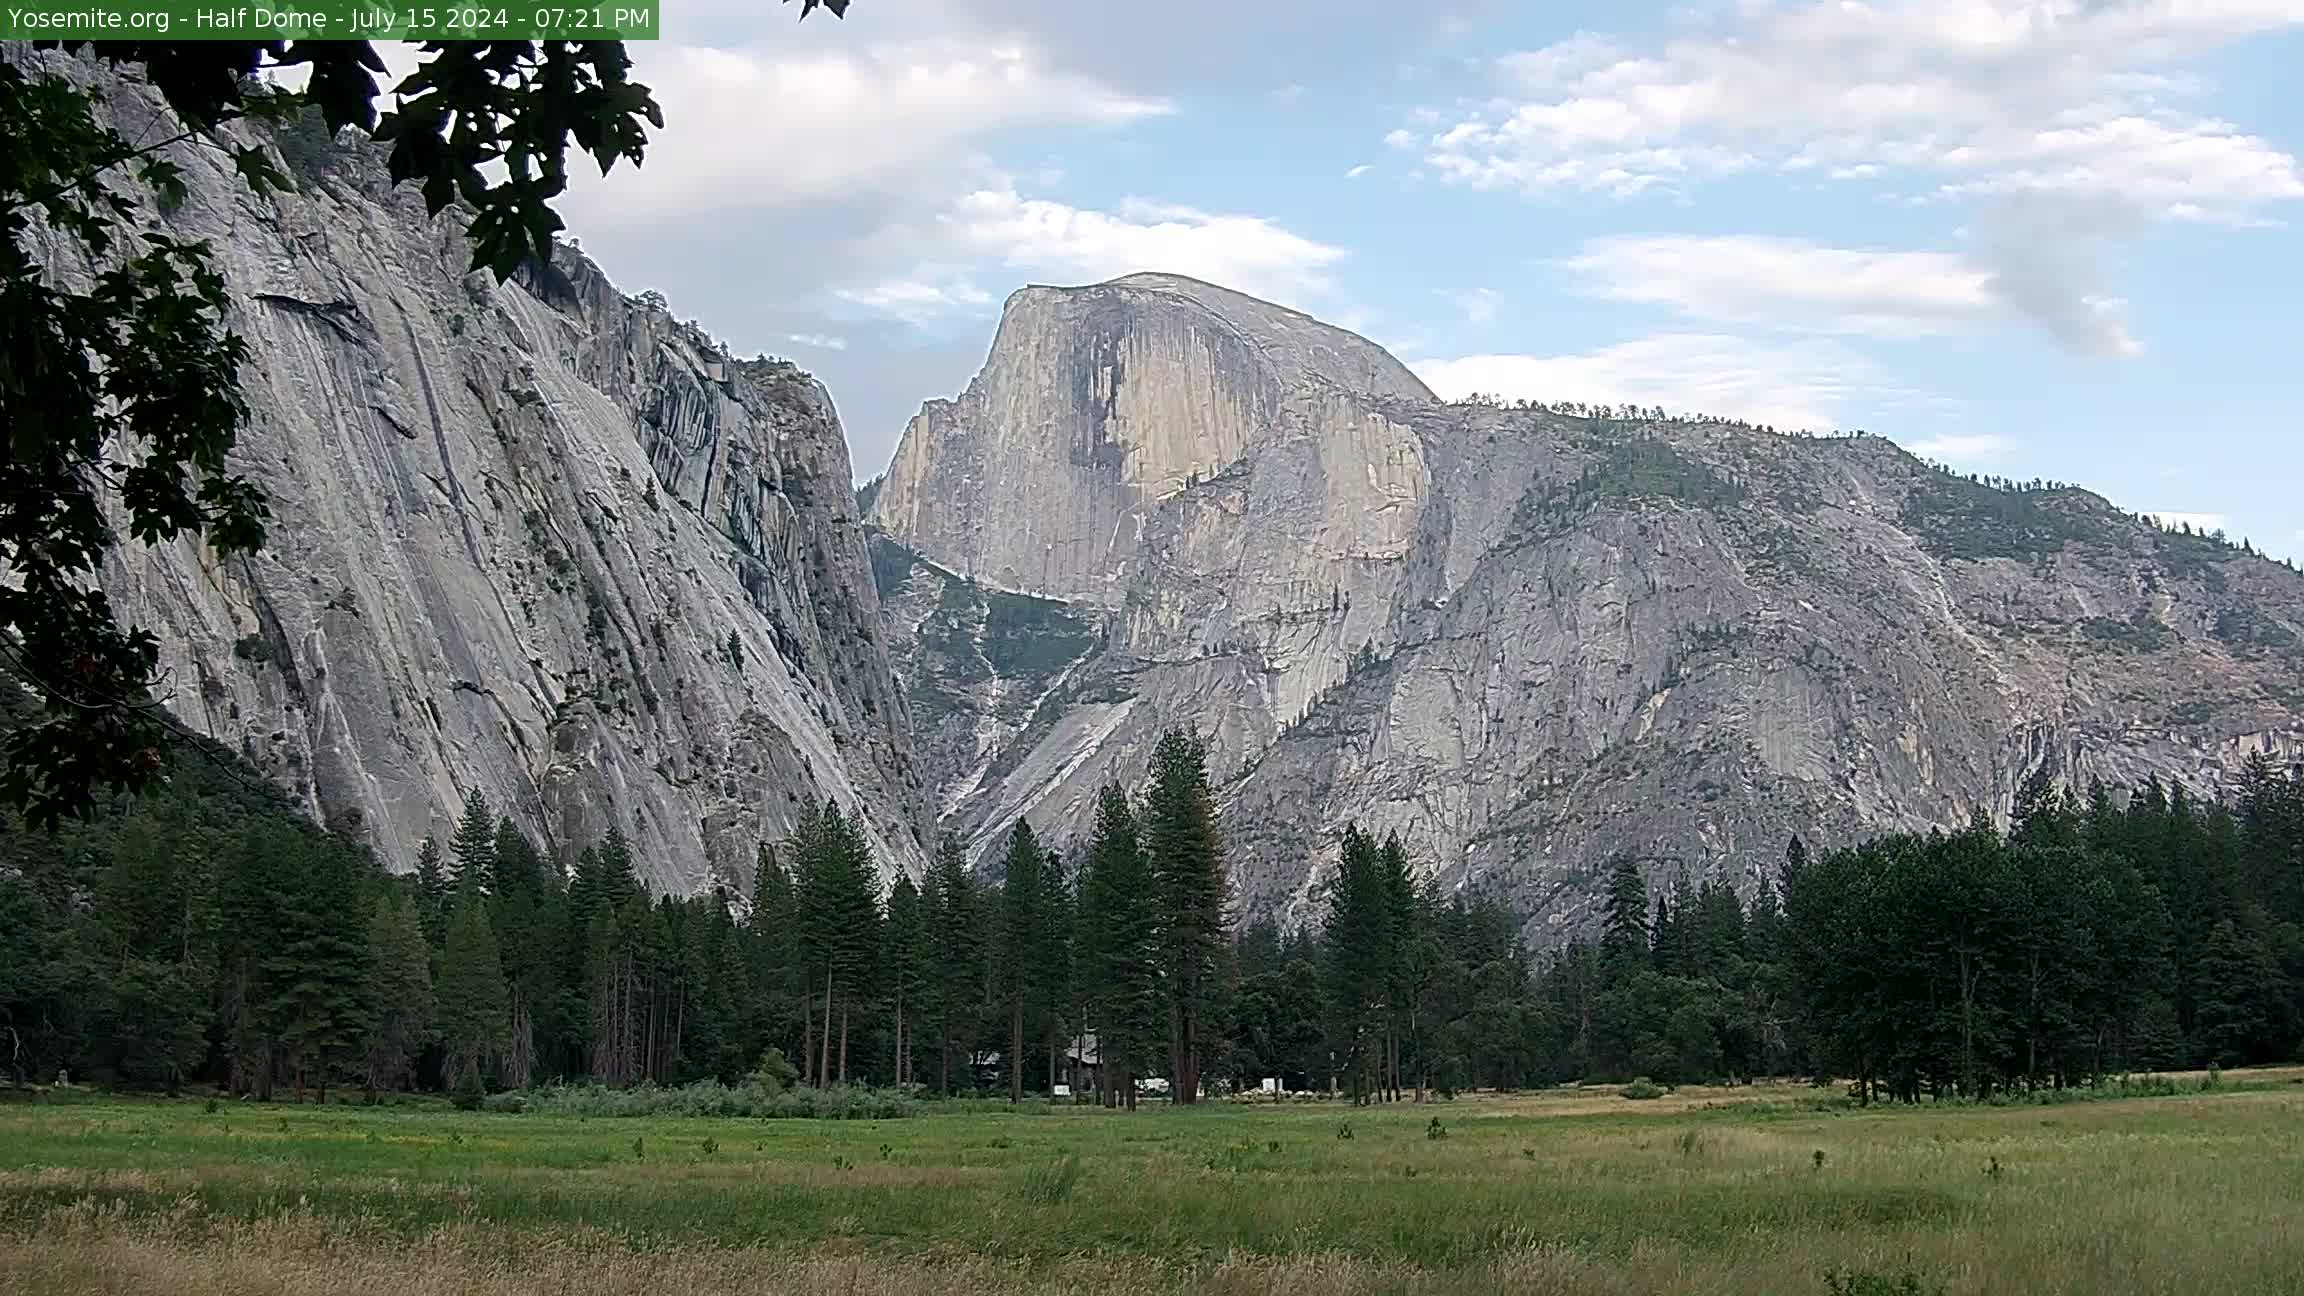 Half Dome Webcam provided by Yosemite Conservancy